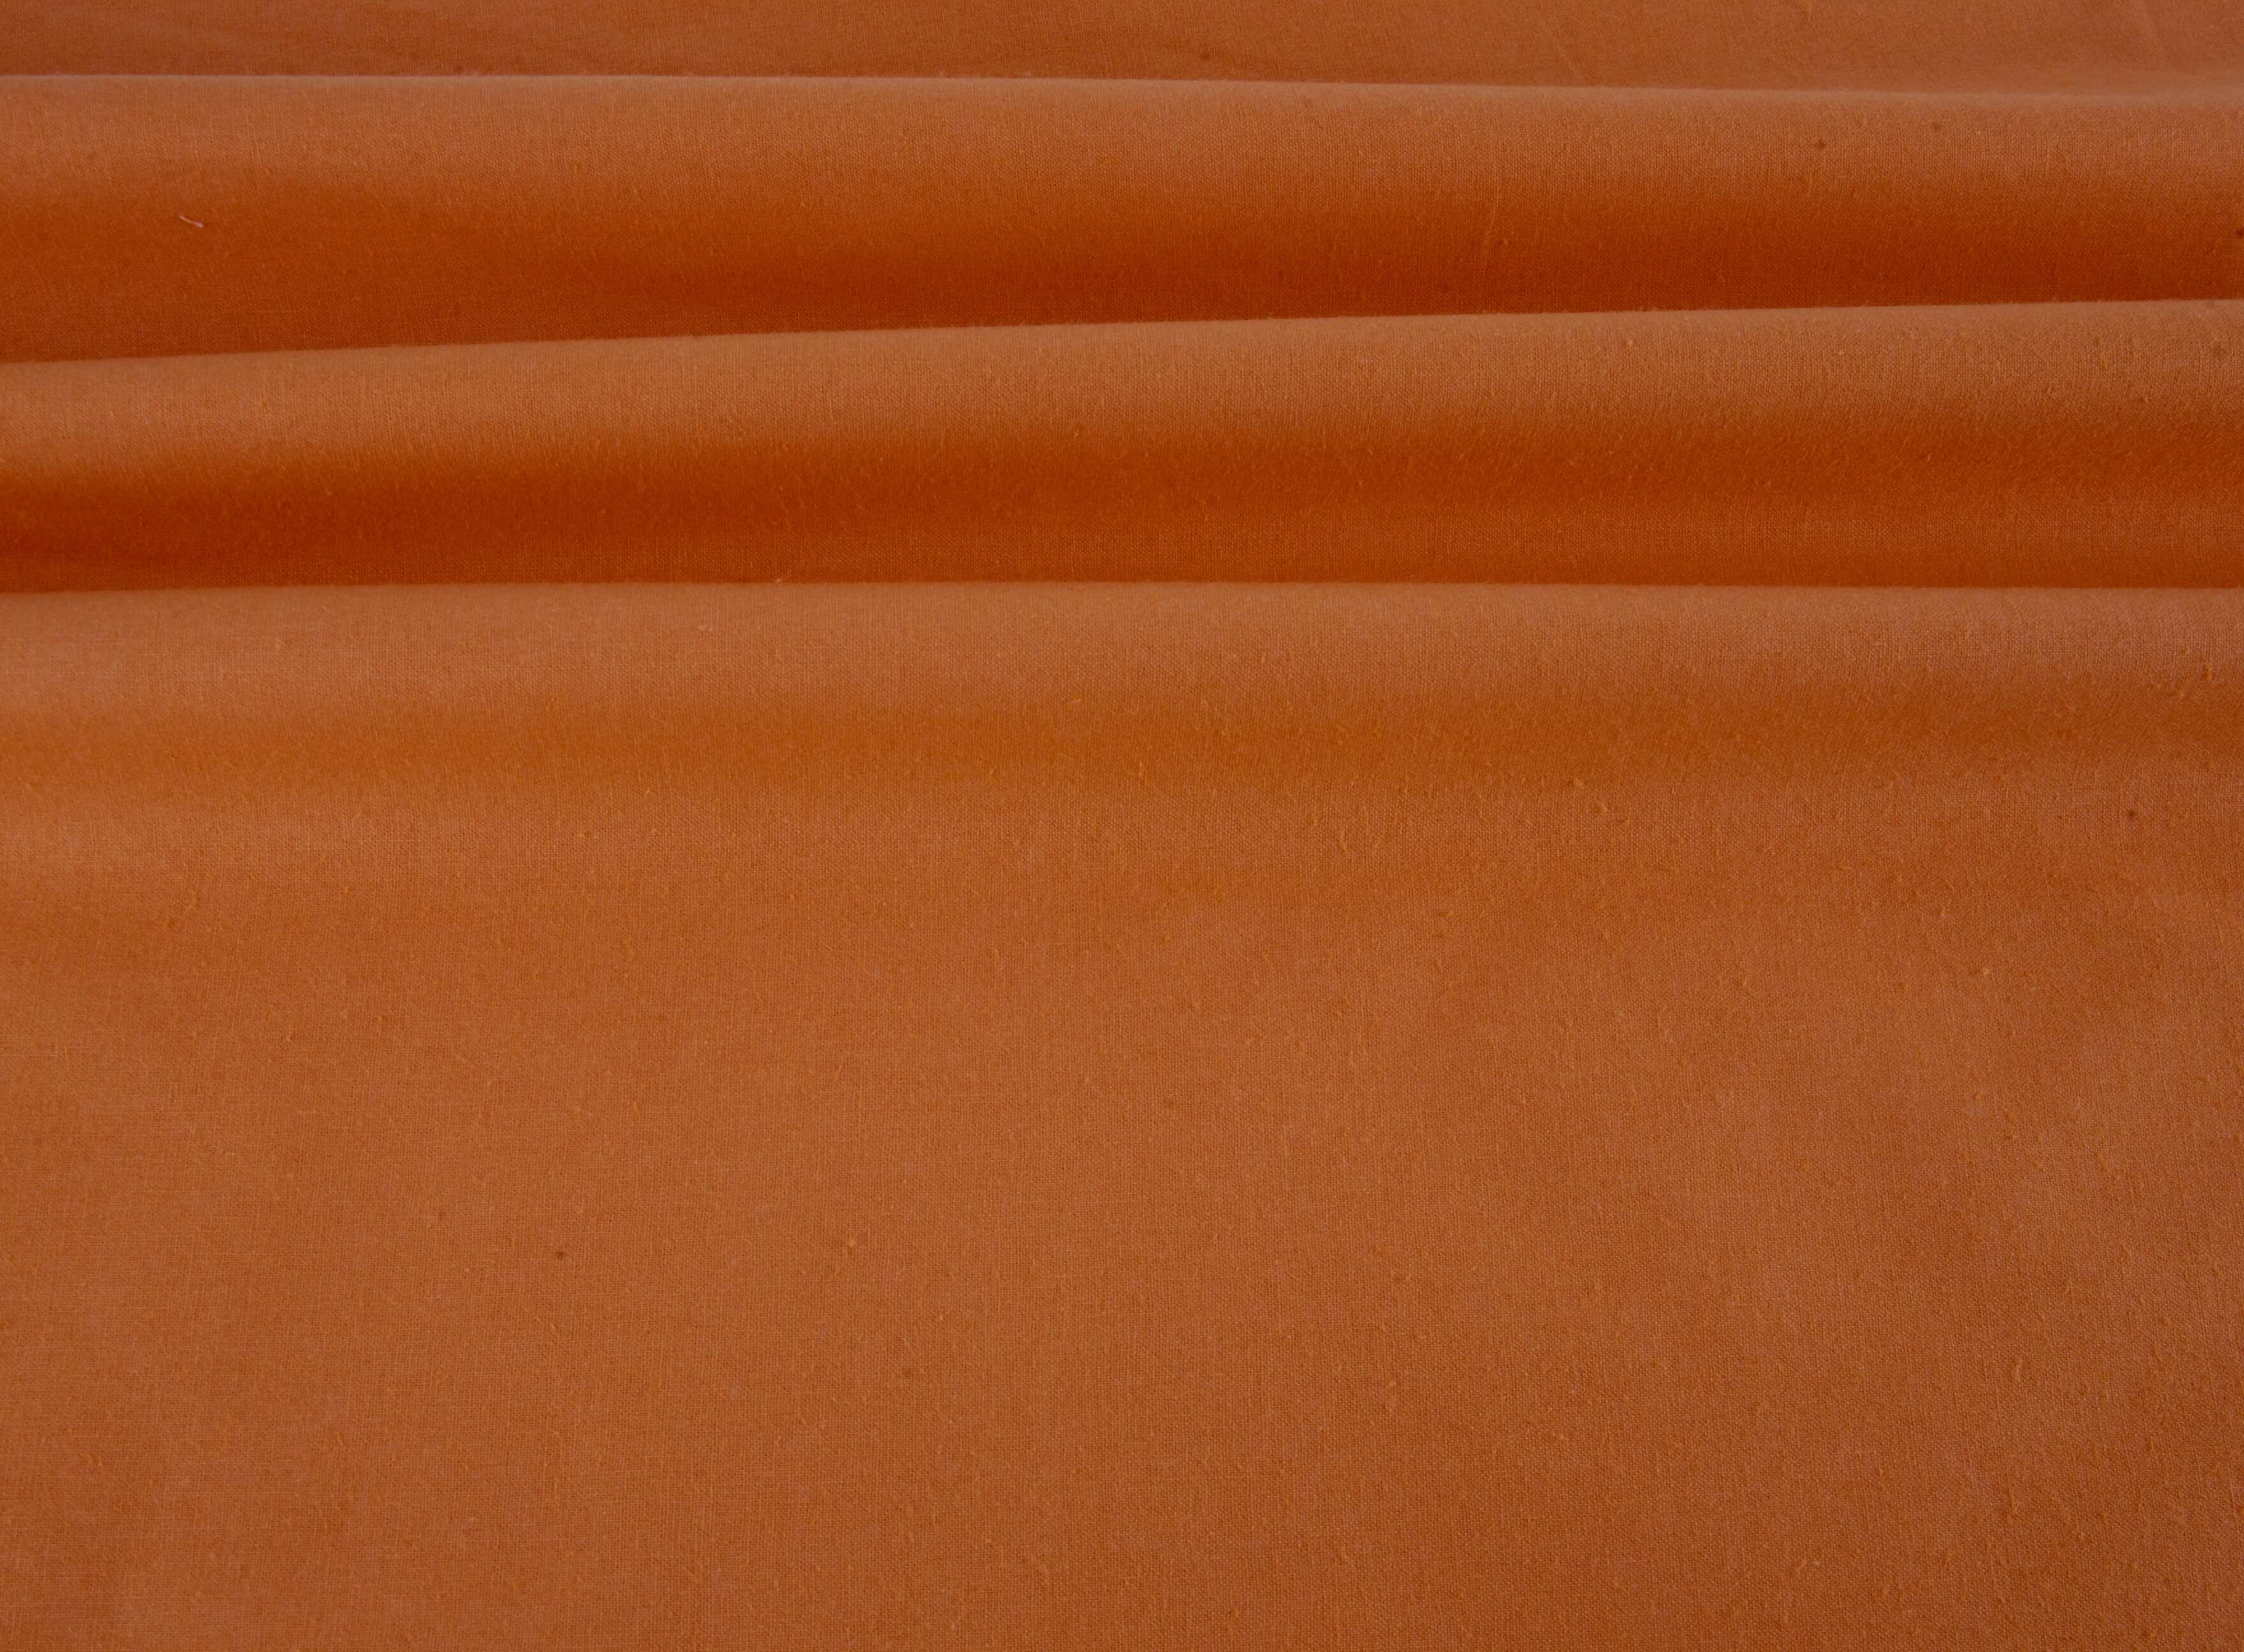 Plain Cotton - Orange